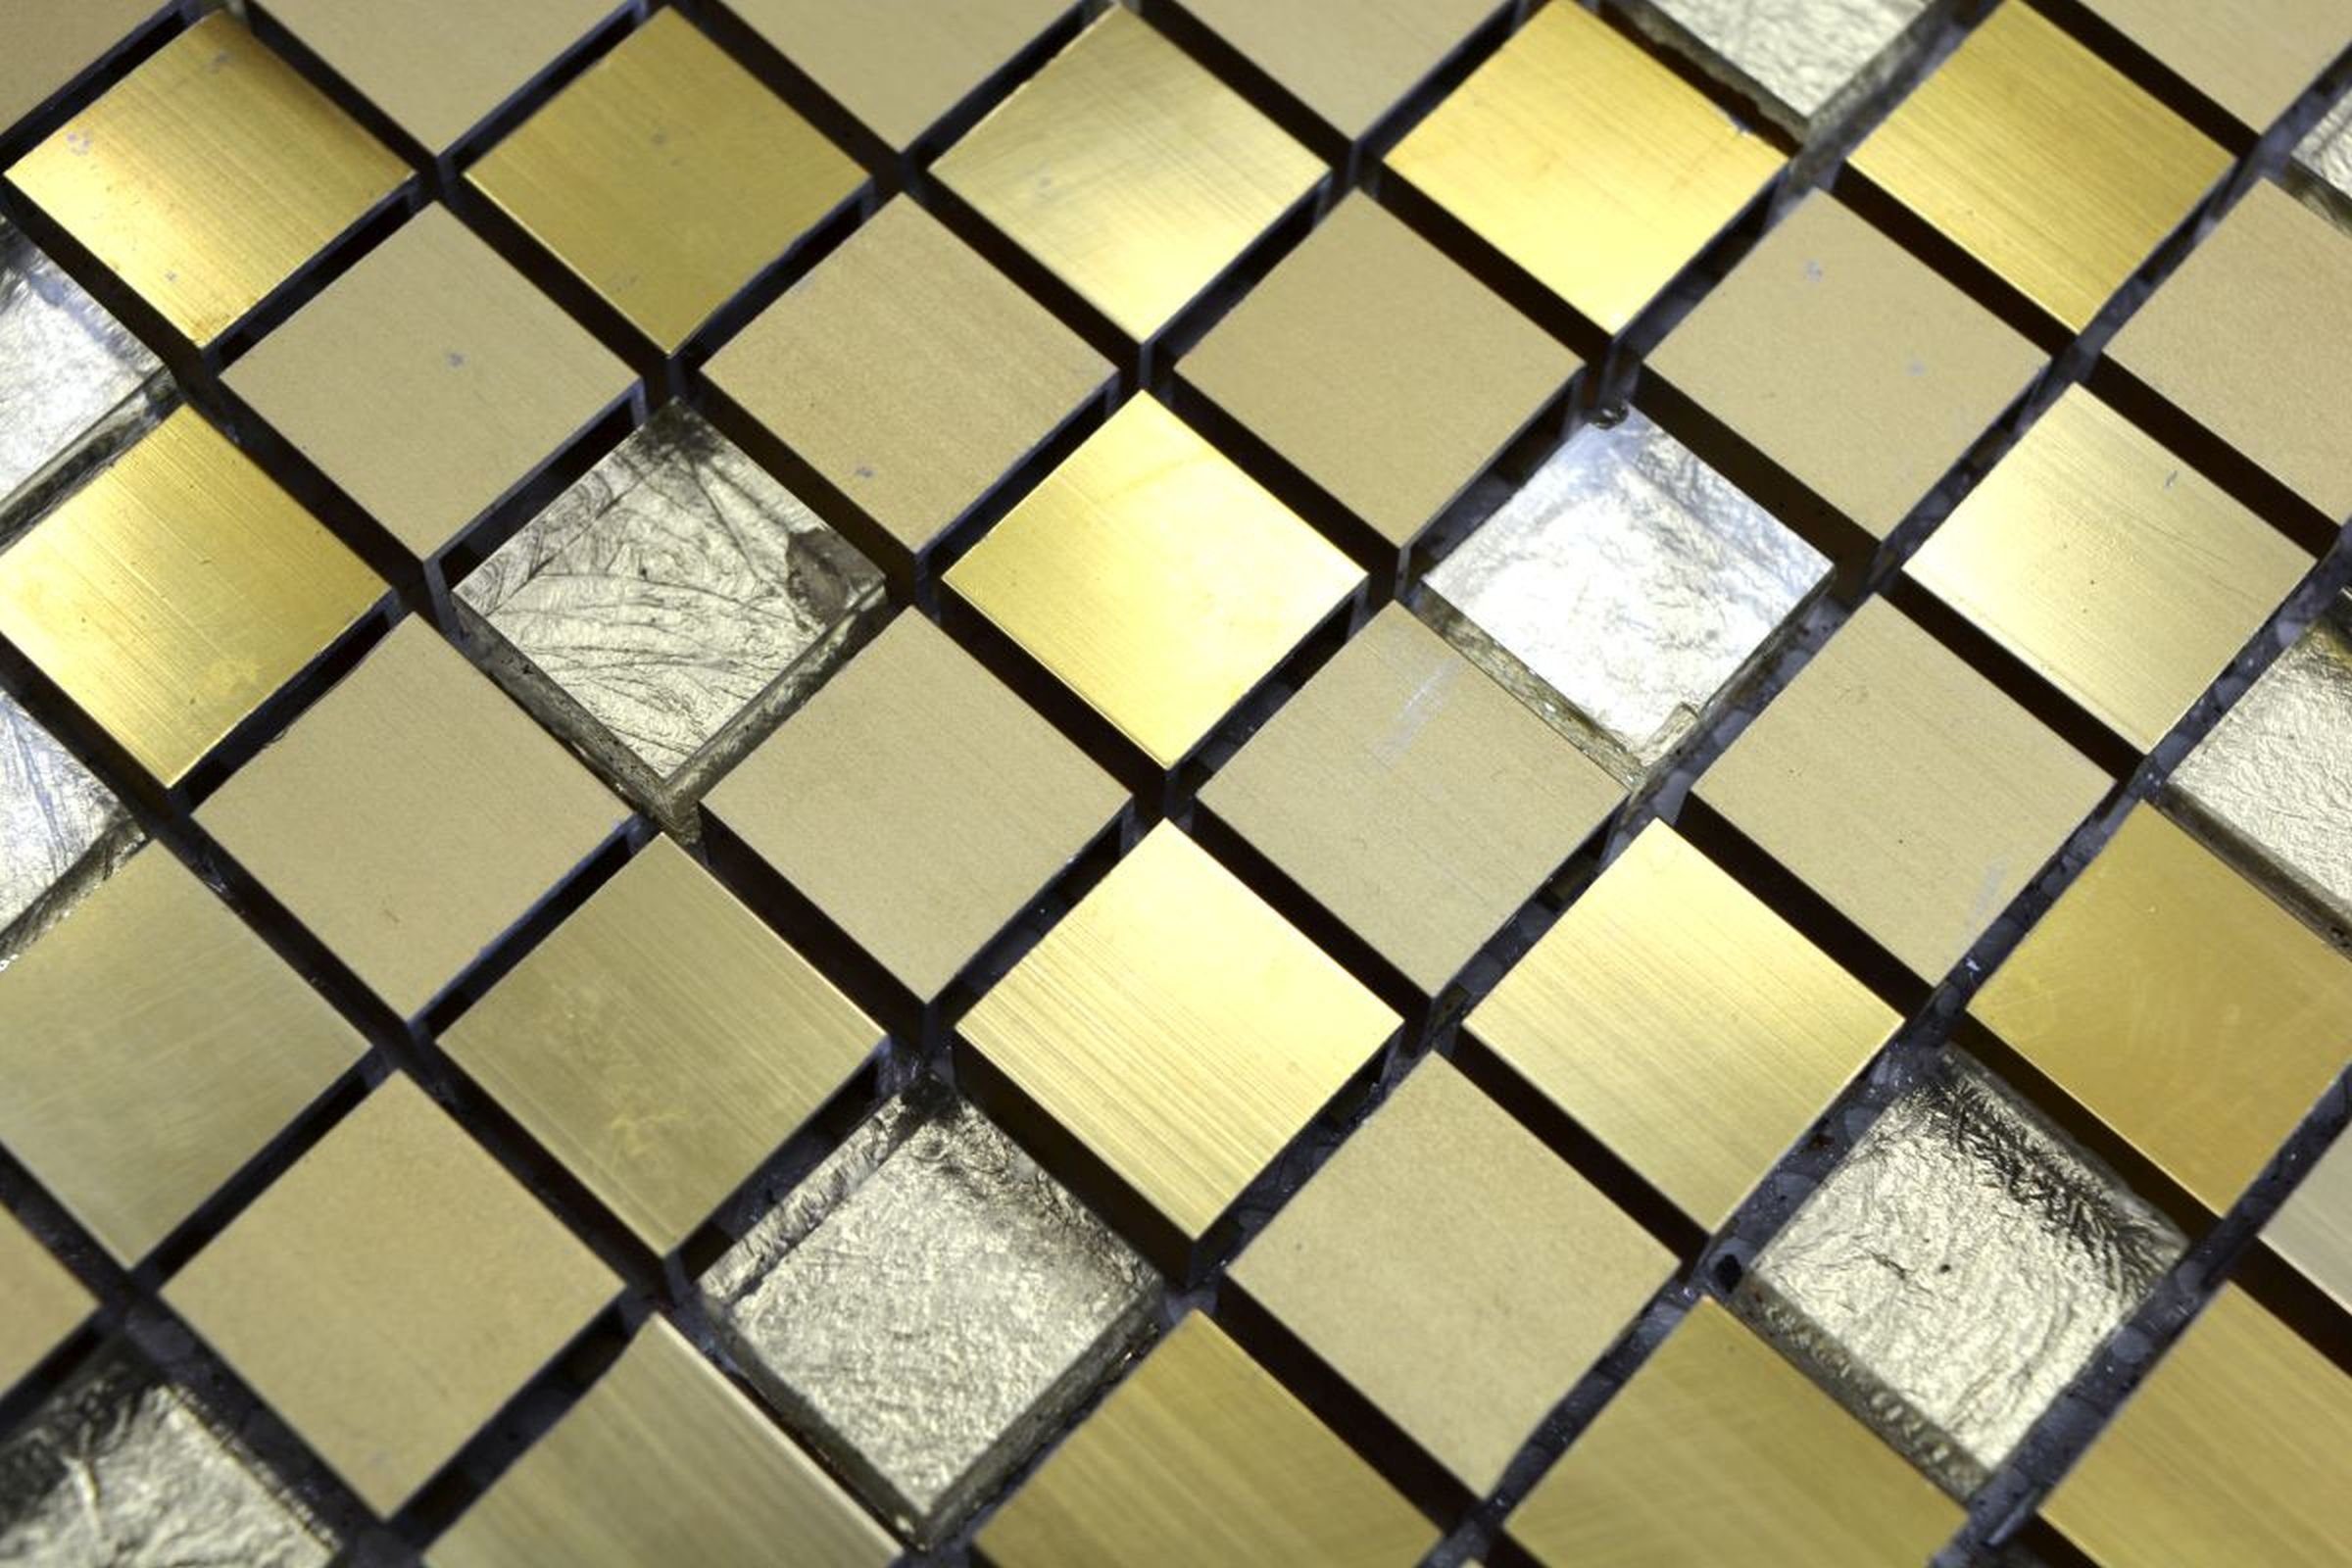 Mosani Mosaikfliesen Mosaik gold Fliese Glasmosaik Küchenrückwand Aluminium